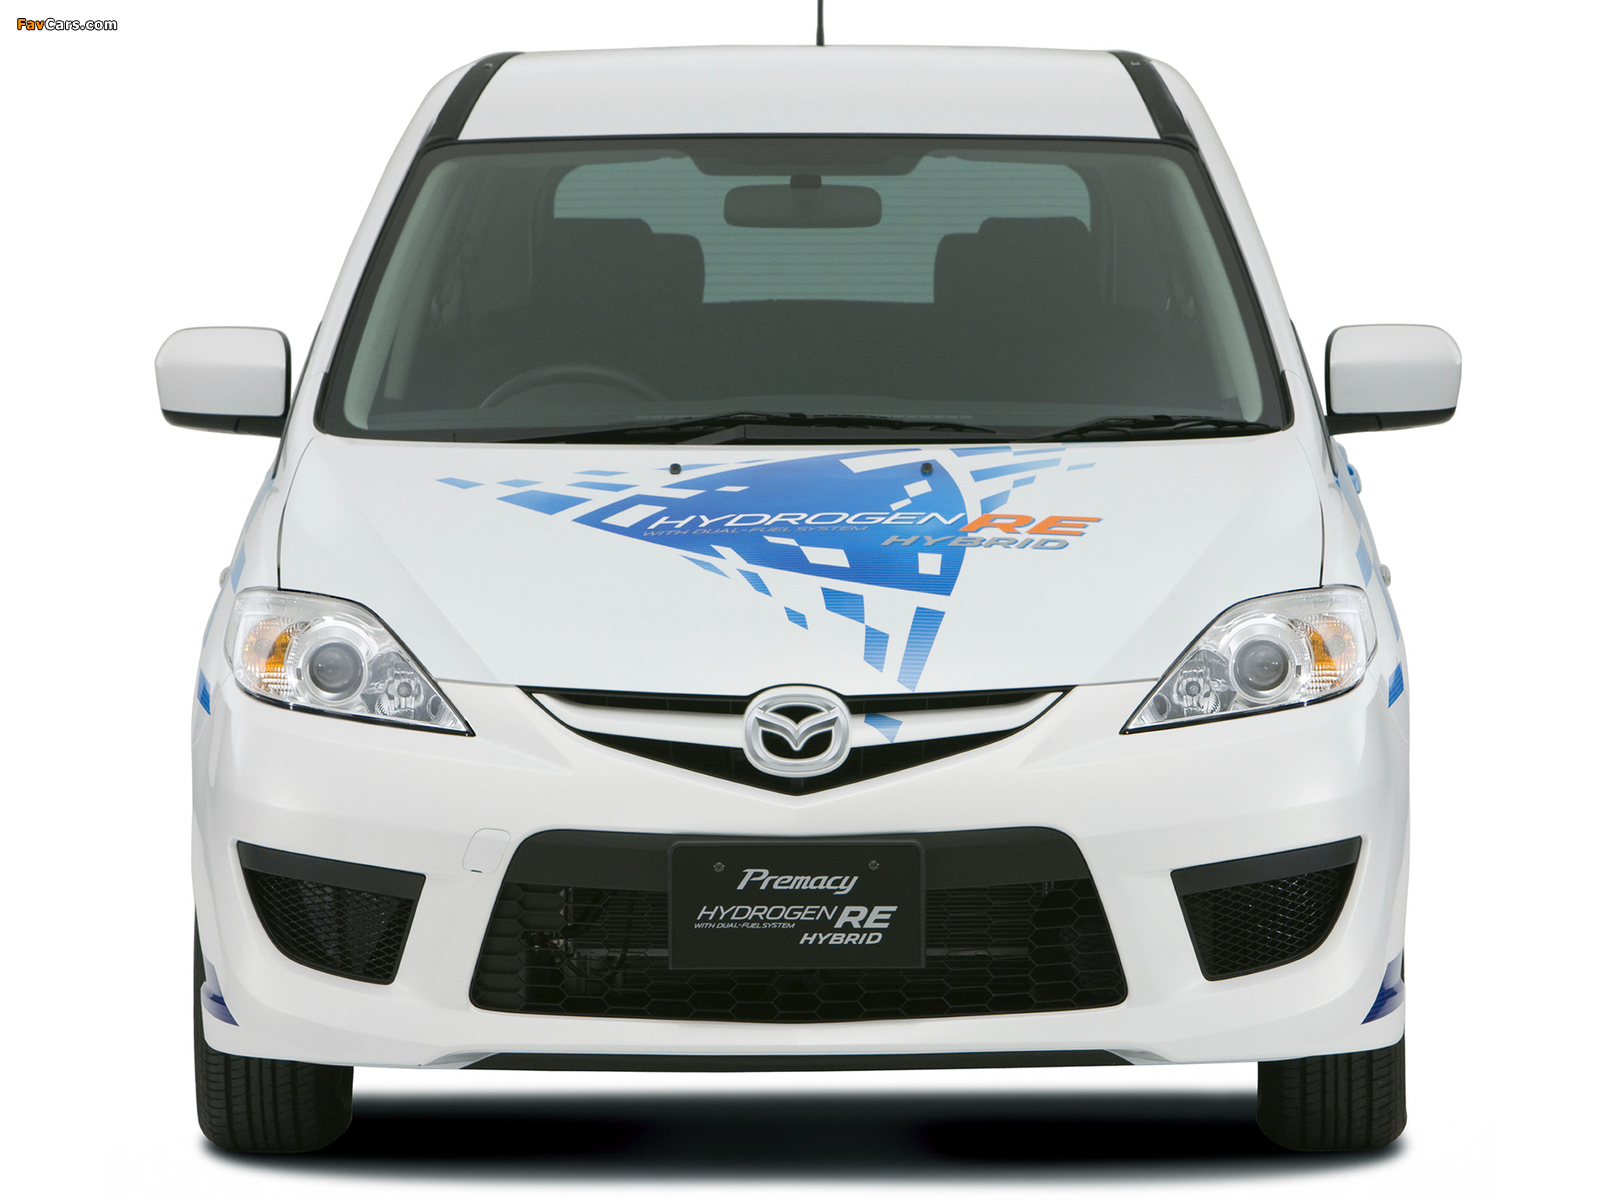 Mazda Premacy Hydrogen RE 2009 pictures (1600 x 1200)